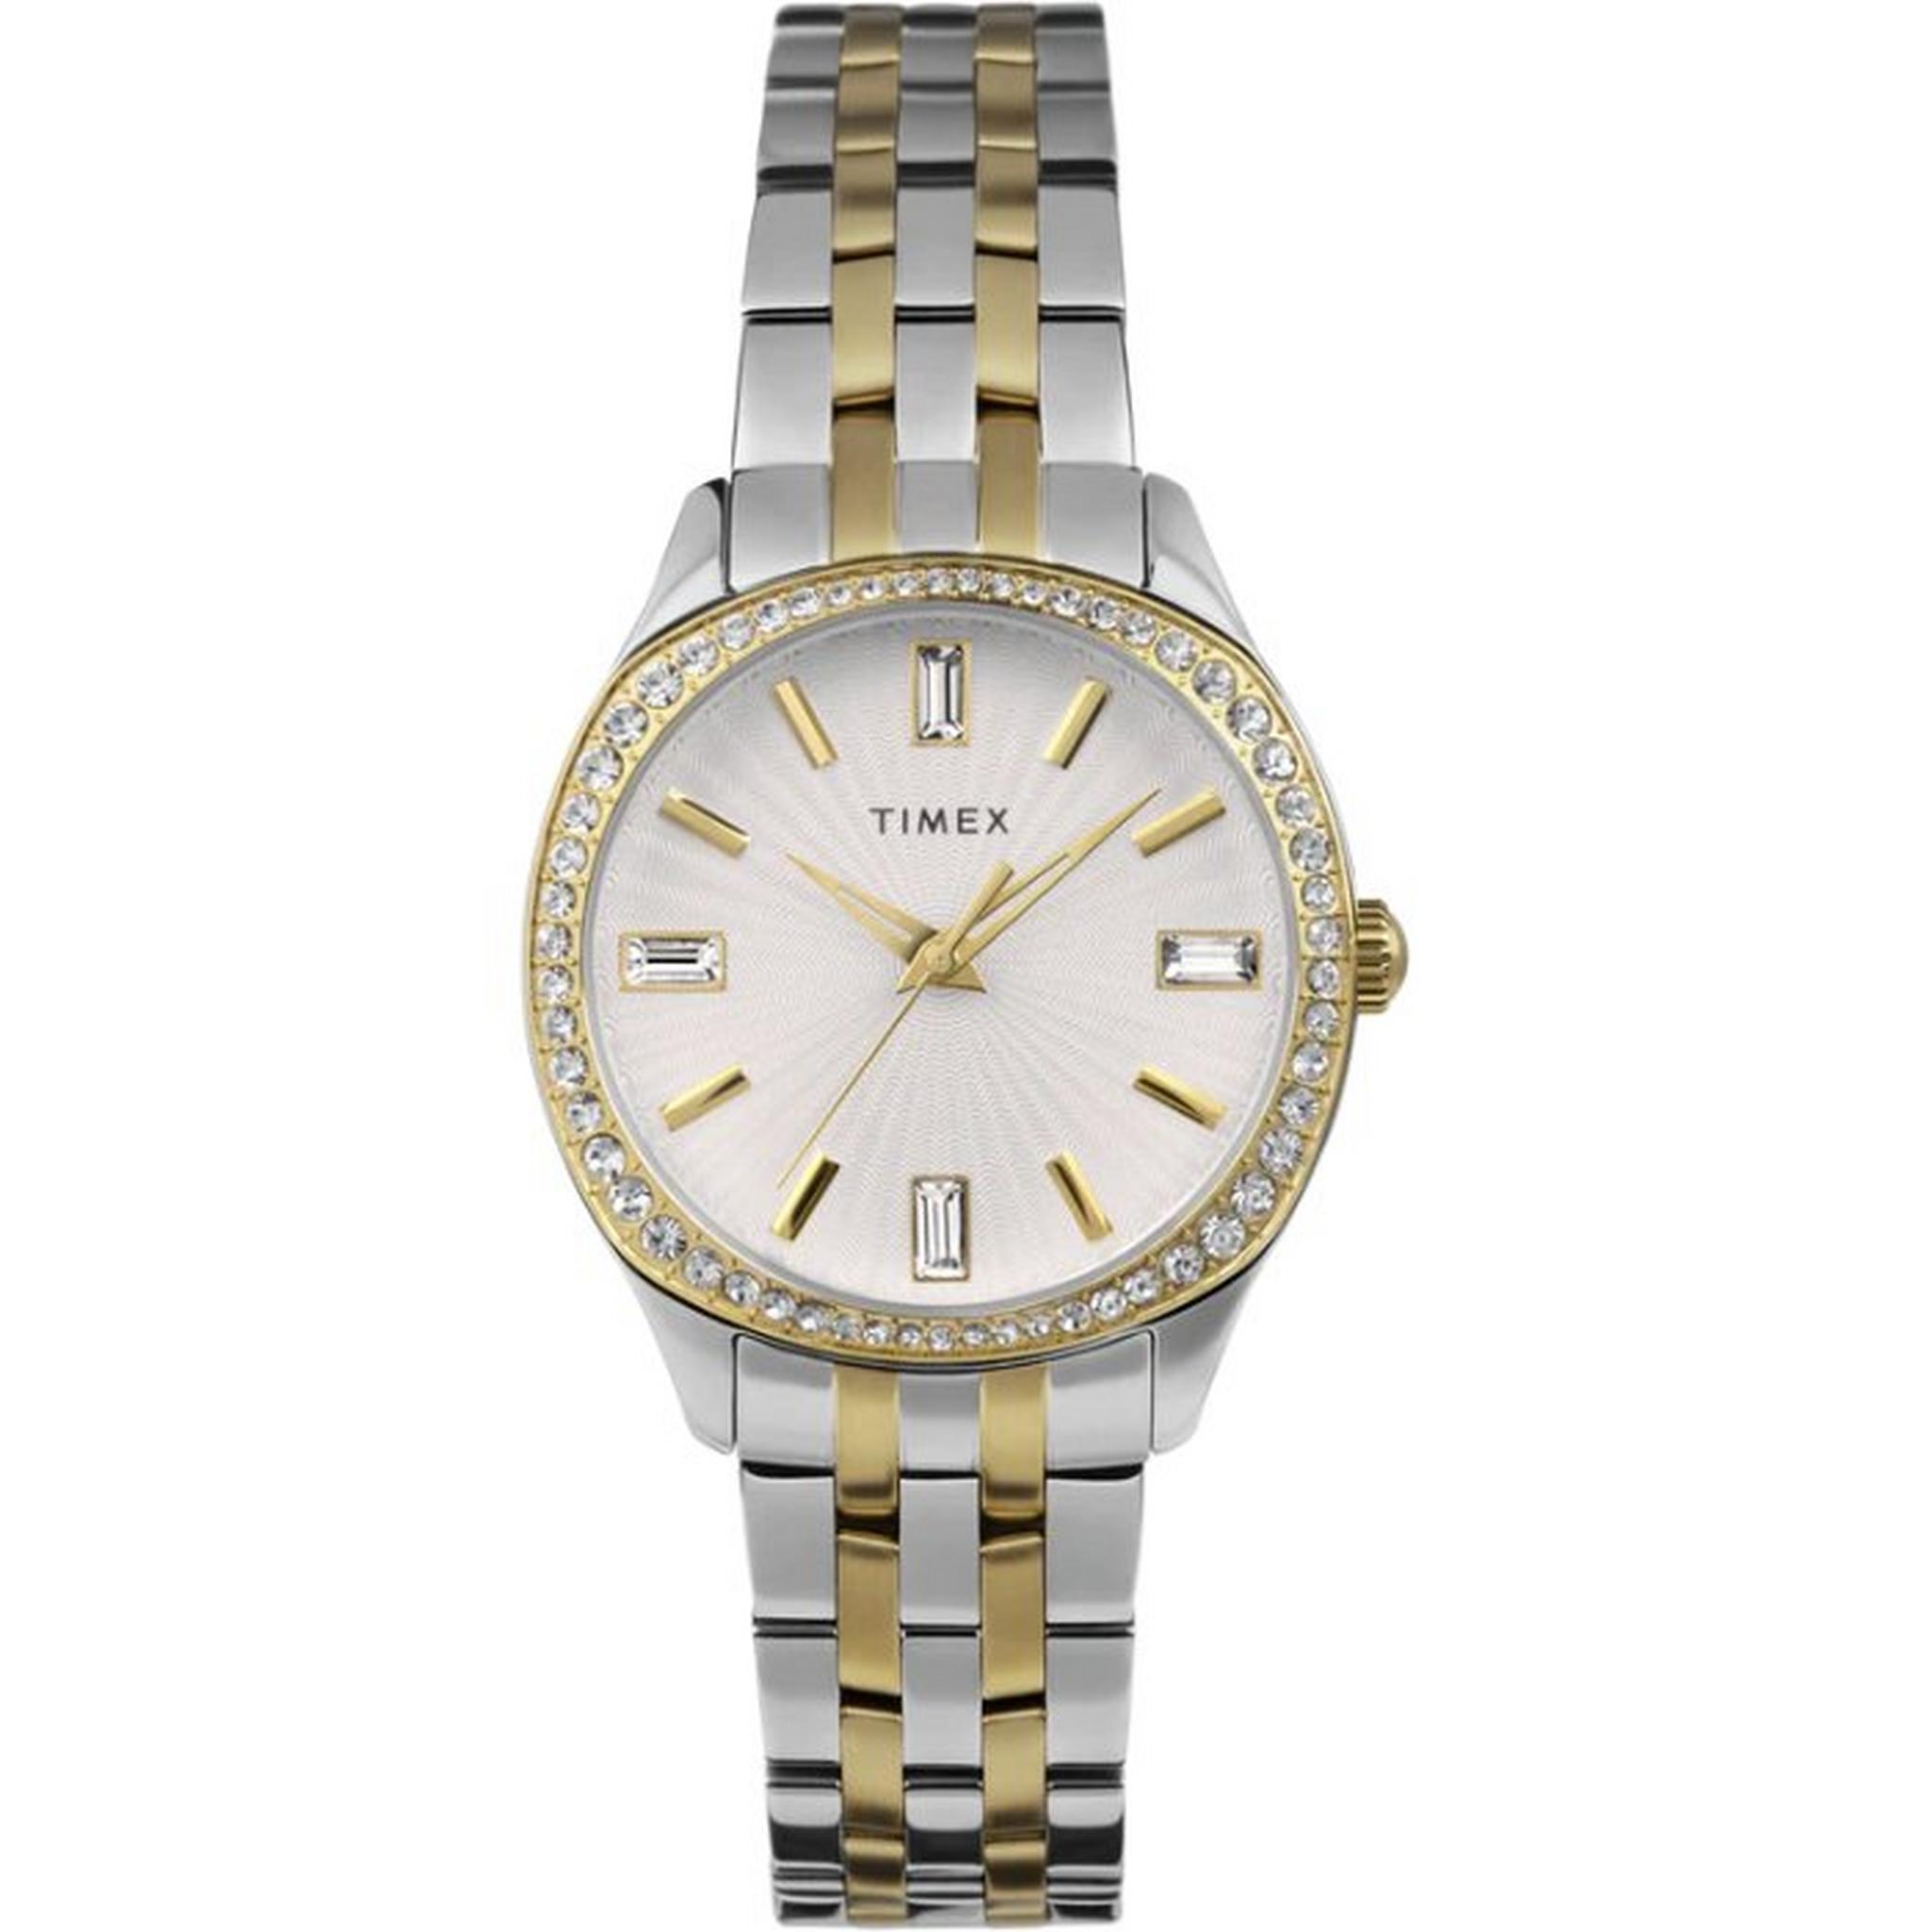 Timex Ariana Women’s Watch, 36mm, Stainless Steel Strap, Analog, TW2W17700 – Silver/Gold